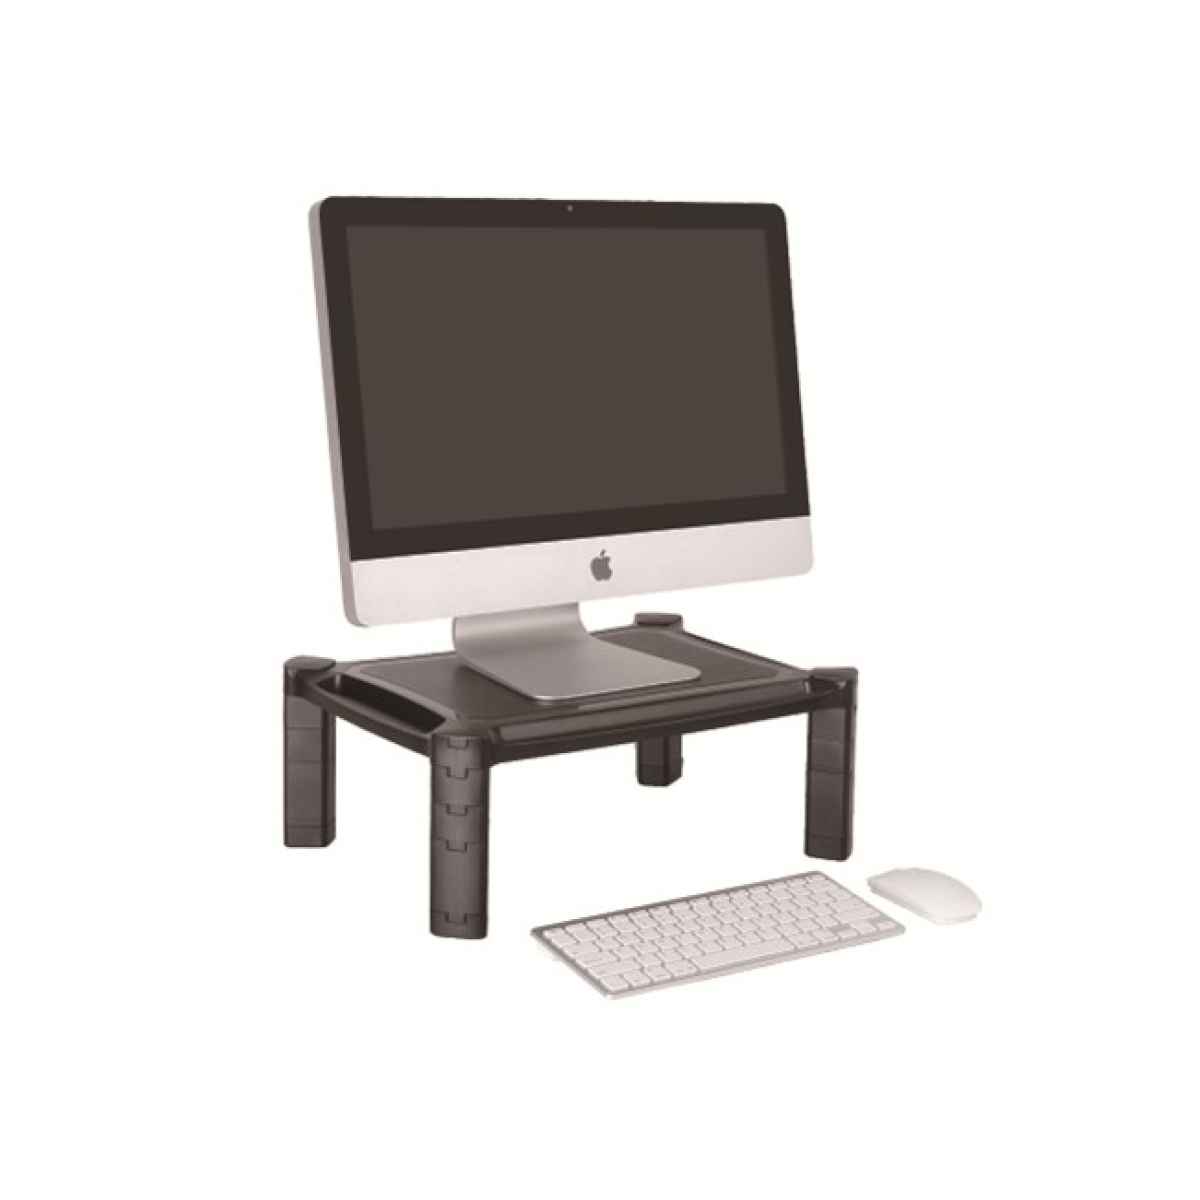 Acatana Monitor Riser Stand Laptop Desktop Height Adjustable Shelf TV Computer Printer ACA-AMS-1L